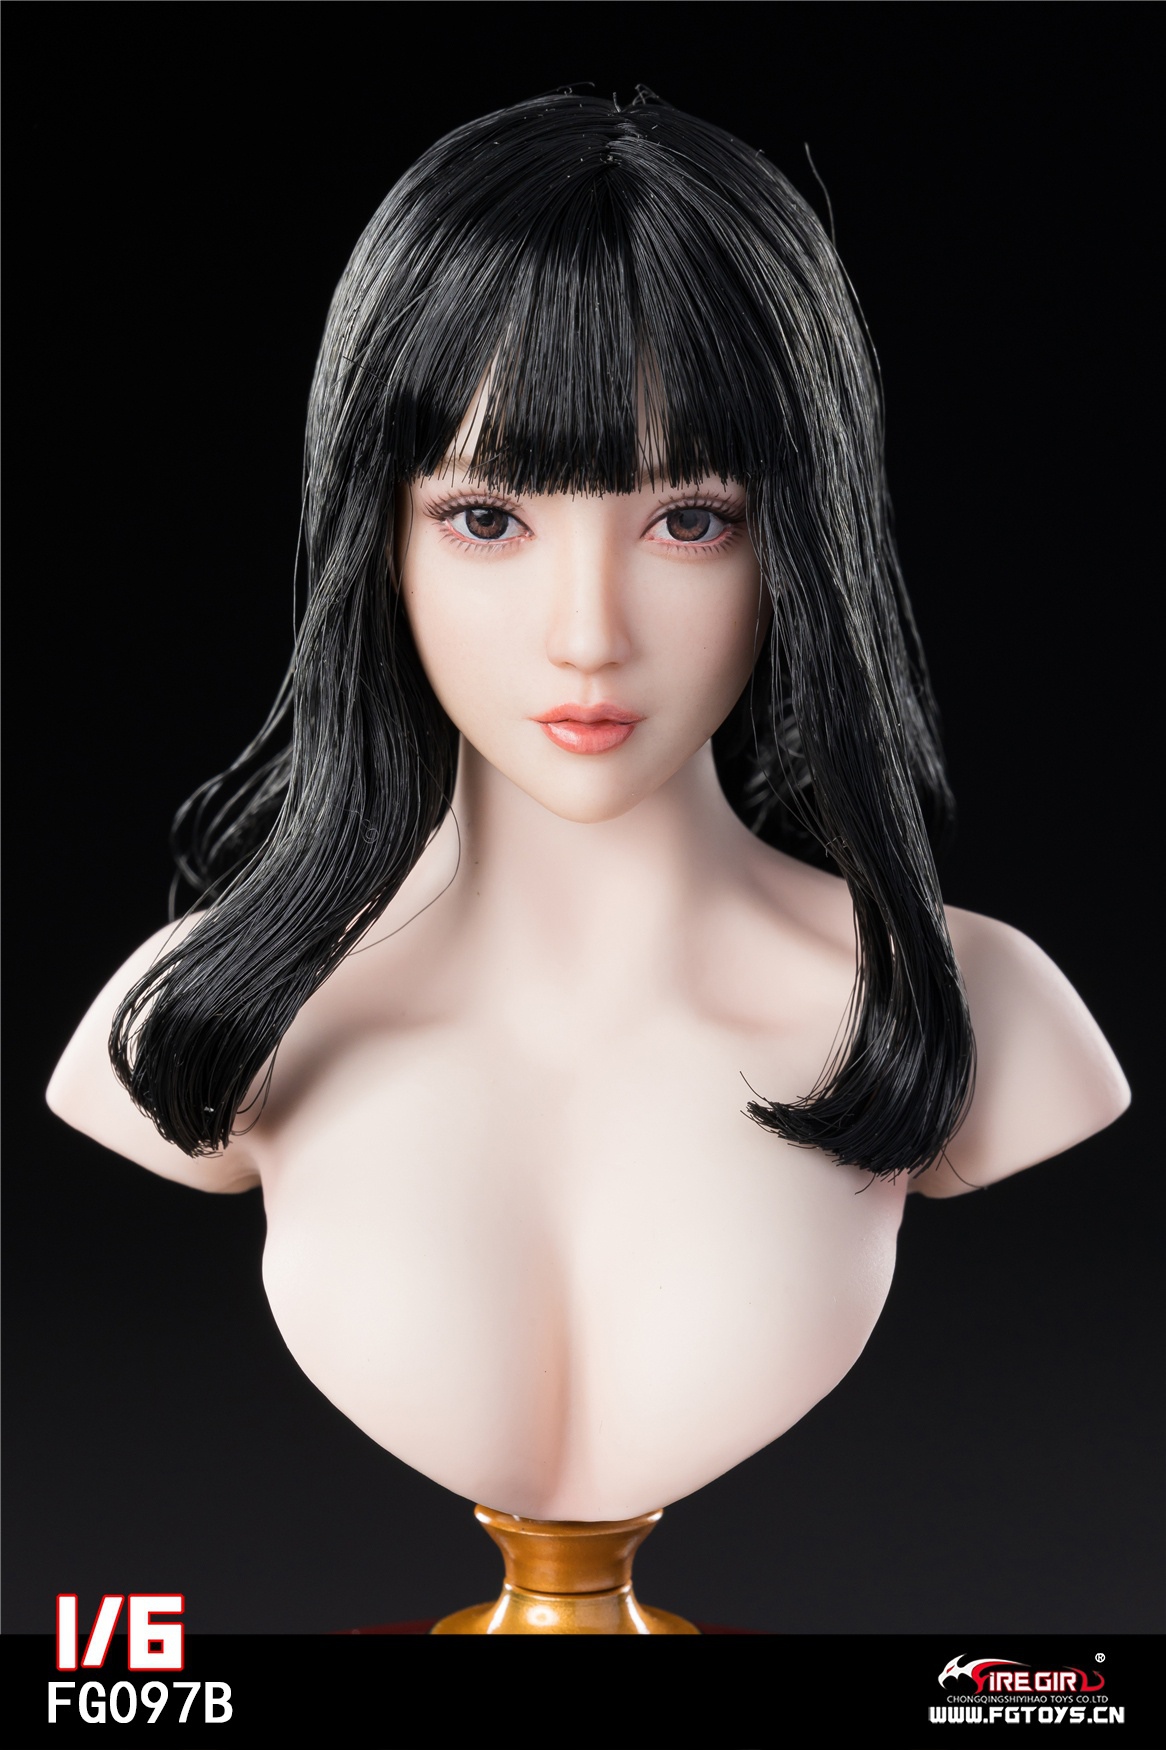 Female - NEW PRODUCT: Fire Girl Toys: Asian Girl Head Sculpture (FG097A/FG097B/FG097C) 1273